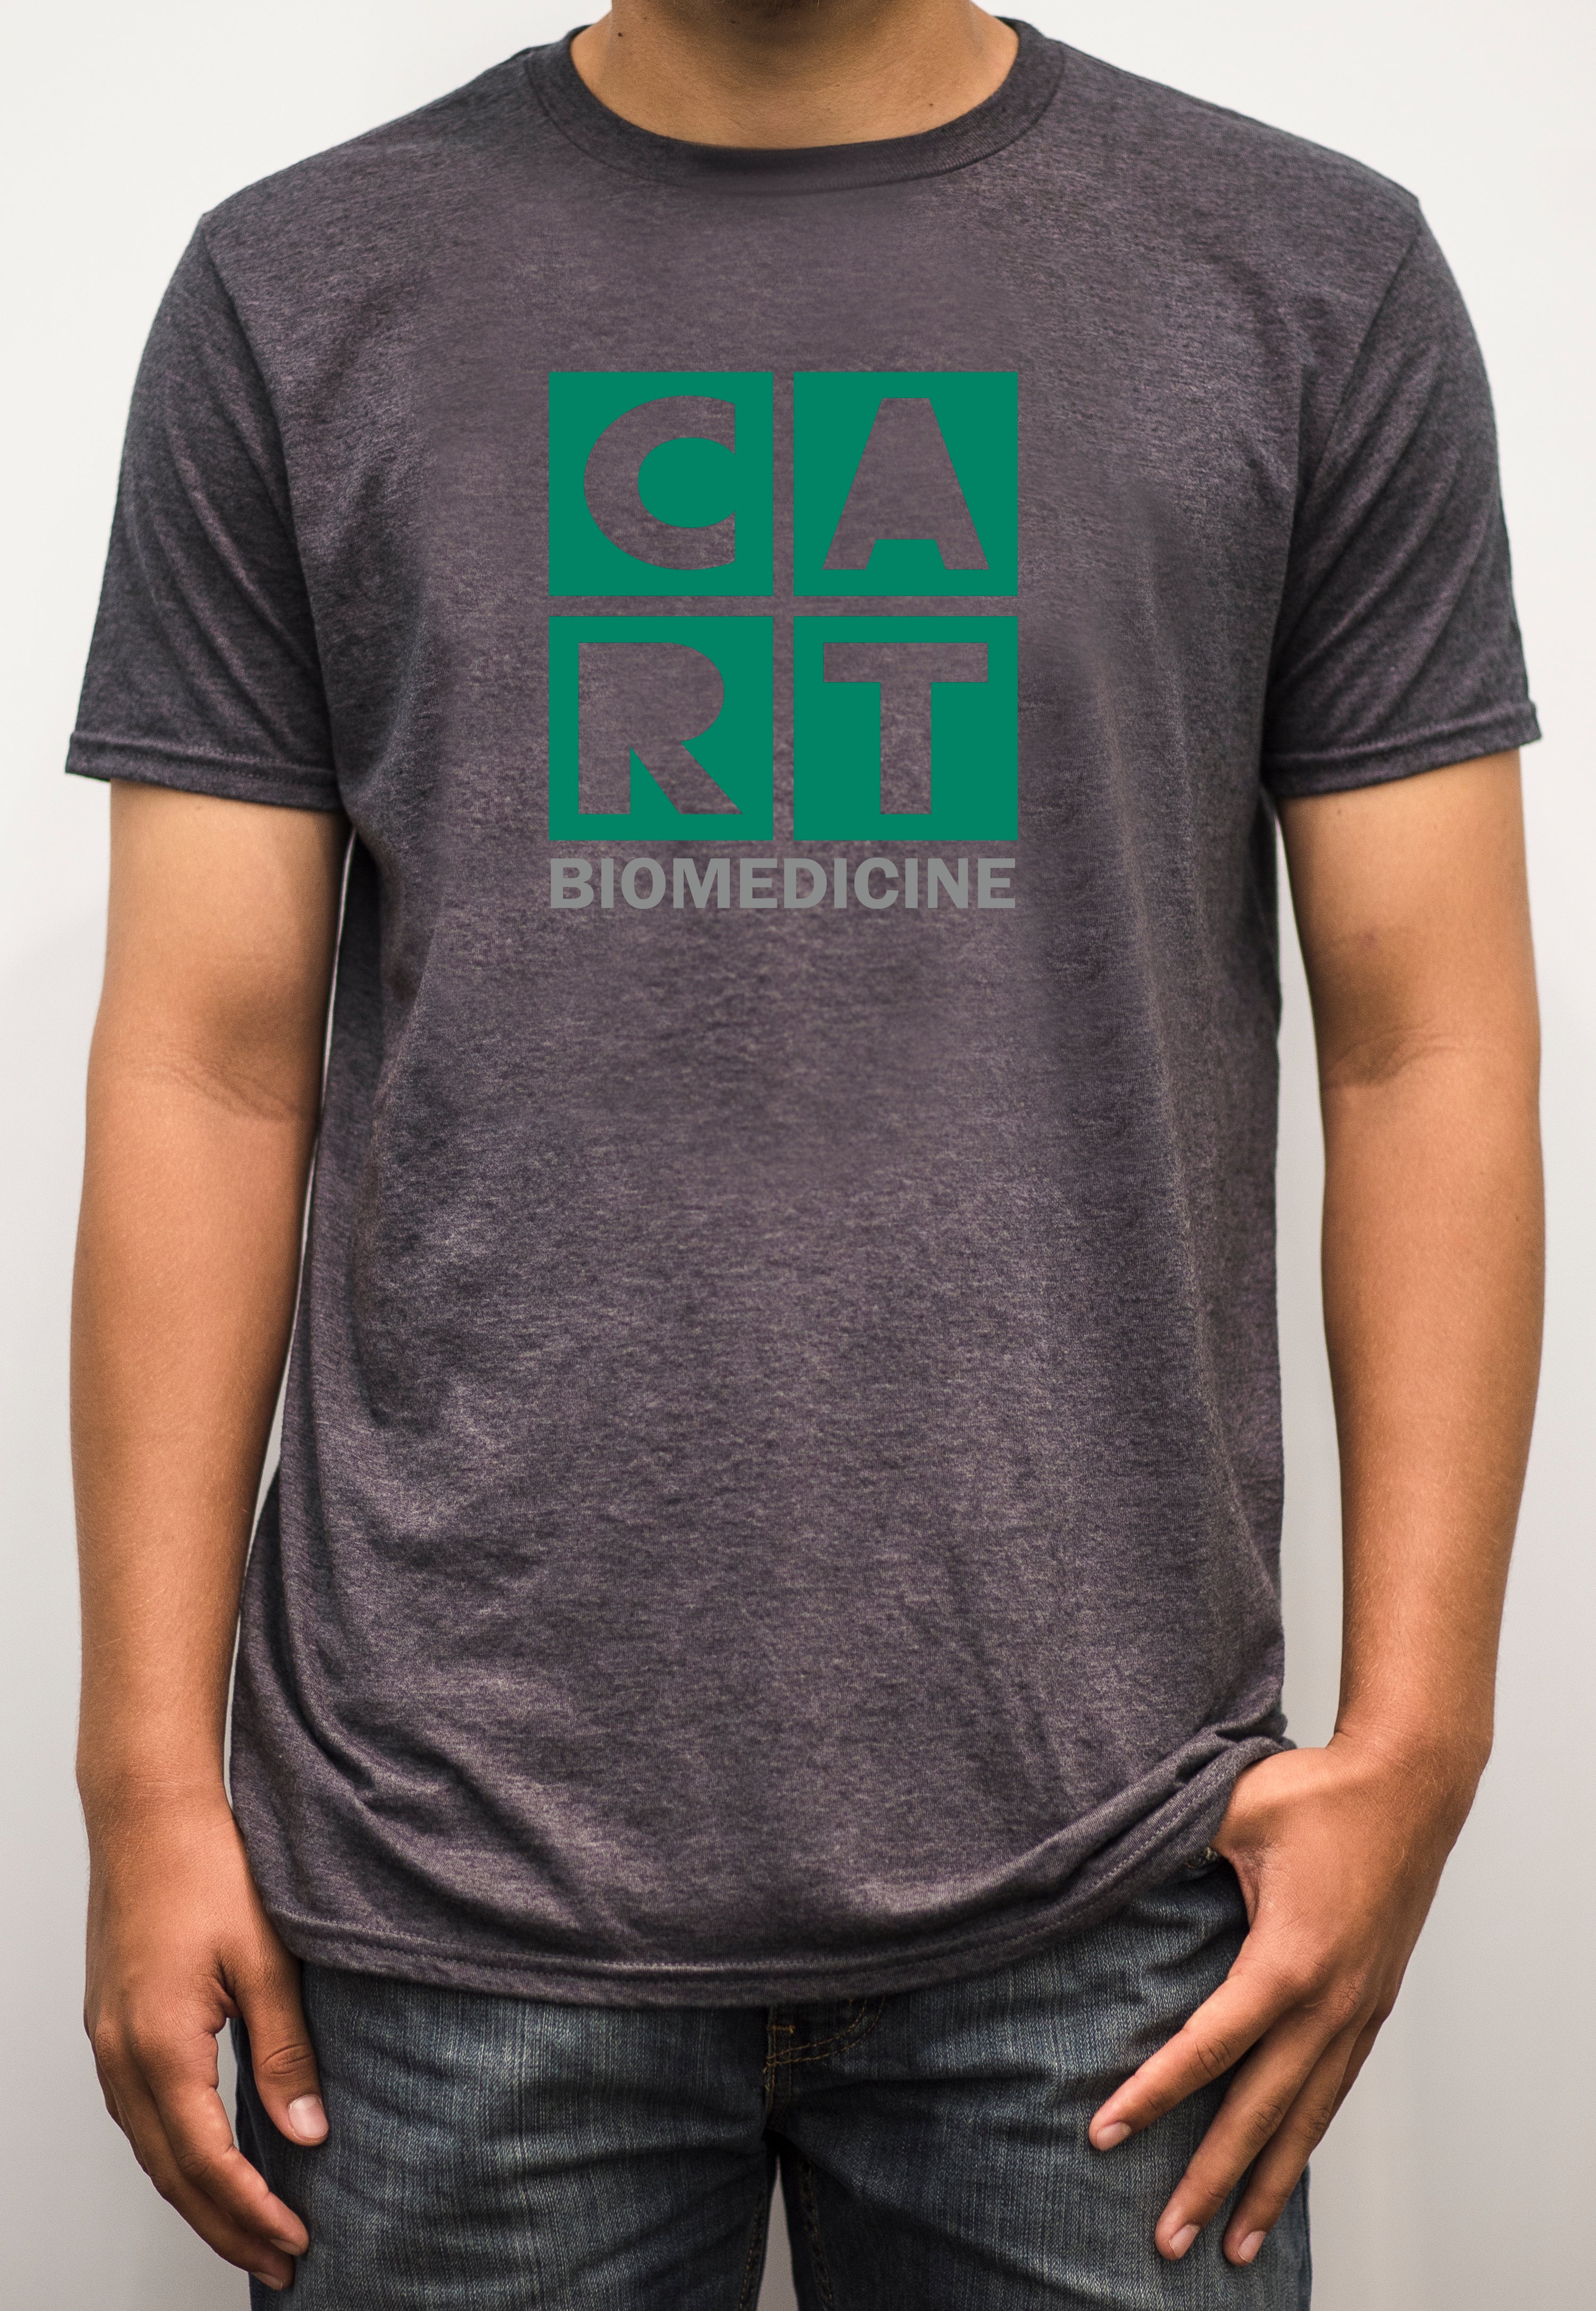 Short sleeve t-shirt - biomedicine grey/green